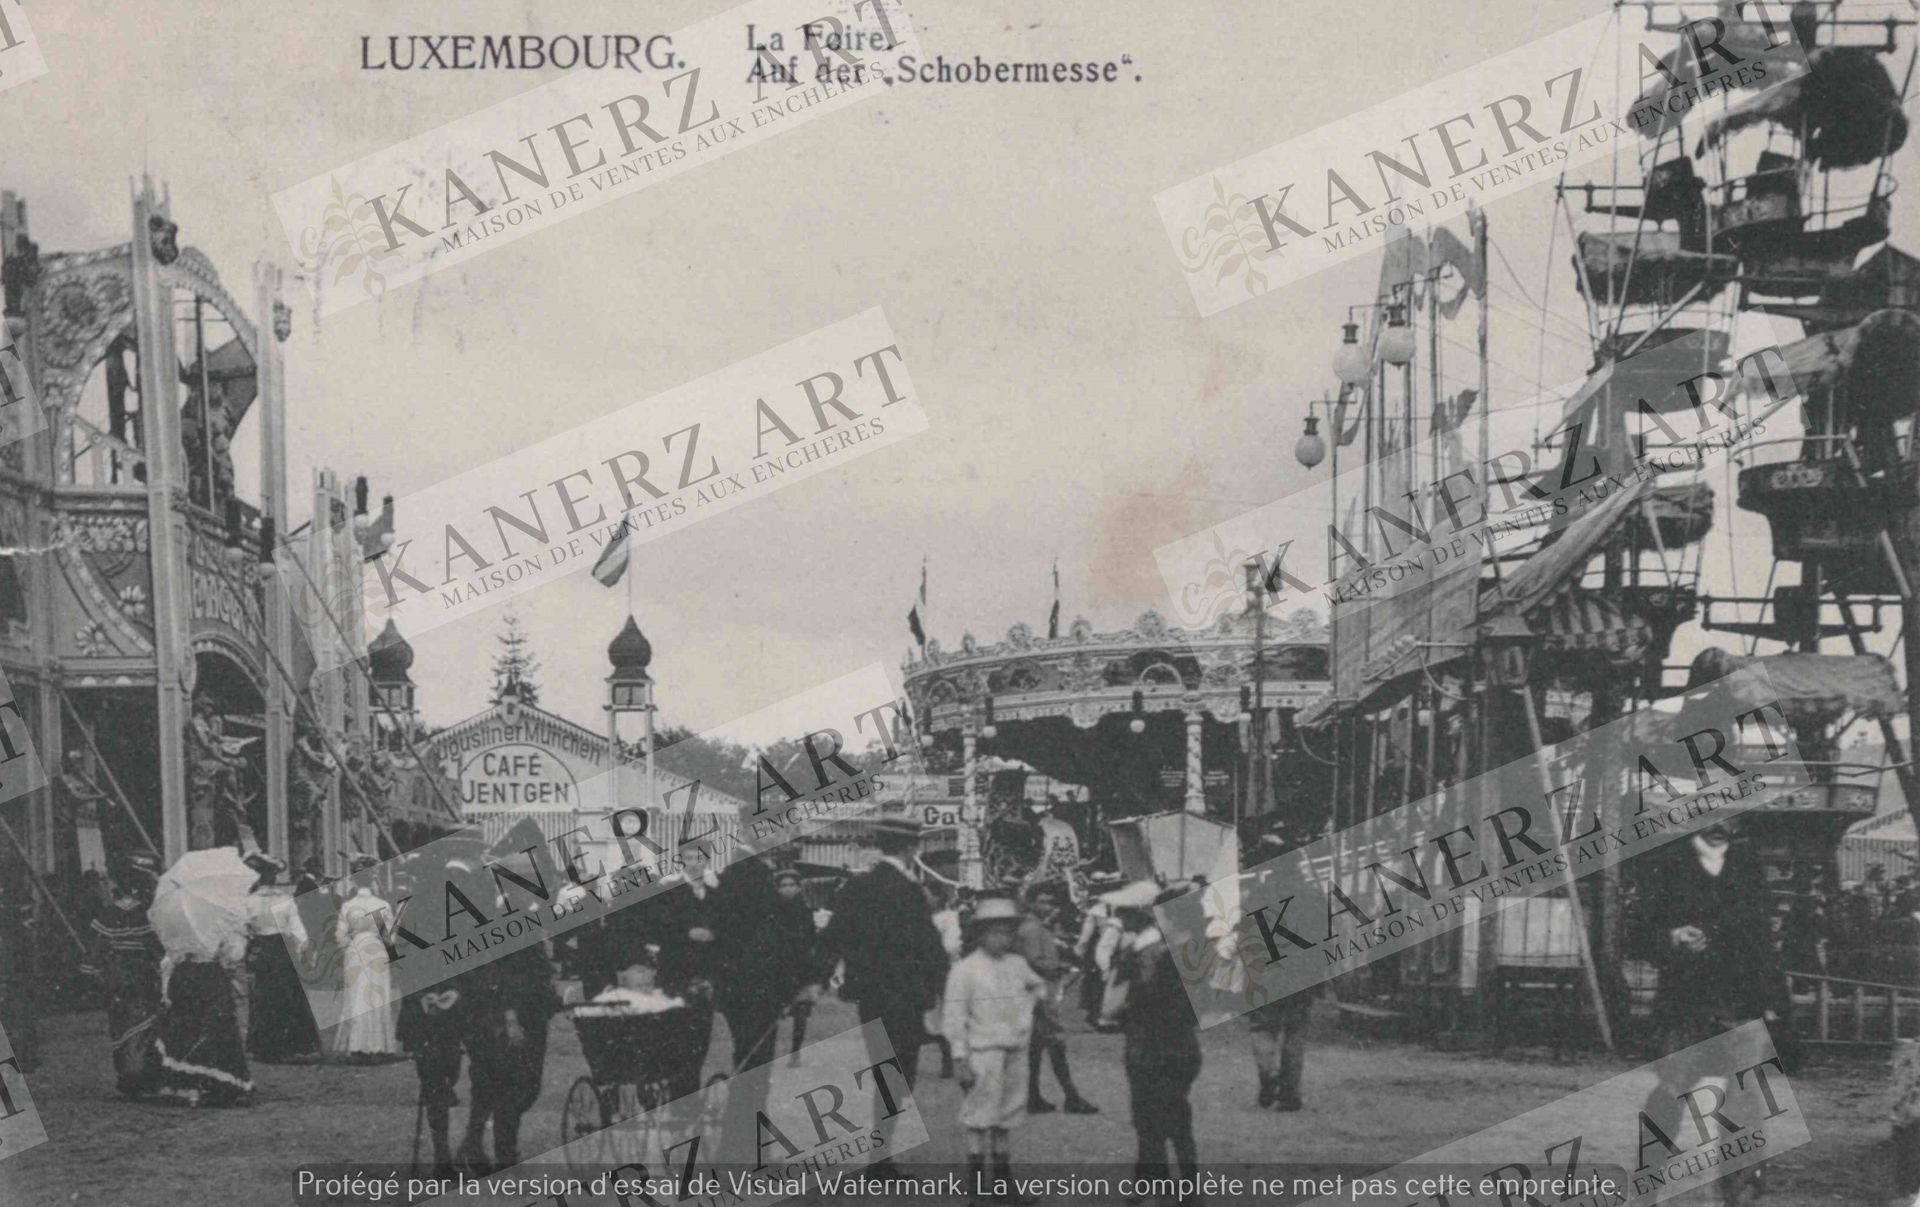 Null (OFFICIAL/SCHOBERMESSE) Postcard of the Schueberfouer "La Foire. Auf der Sc&hellip;